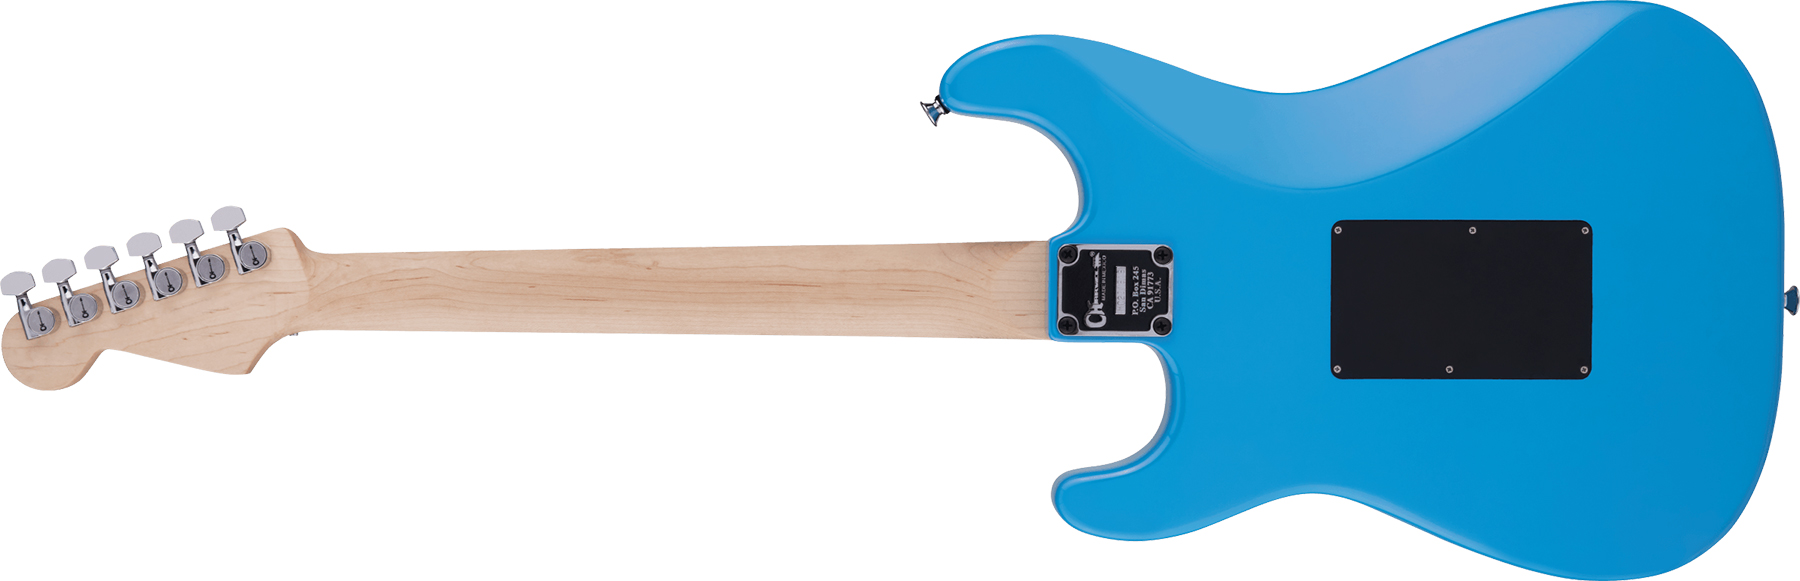 Charvel So-cal Style 1 Hsh Fr E Pro-mod Seymour Duncan Eb - Robbin's Egg Blue - Guitare Électrique Forme Str - Variation 1